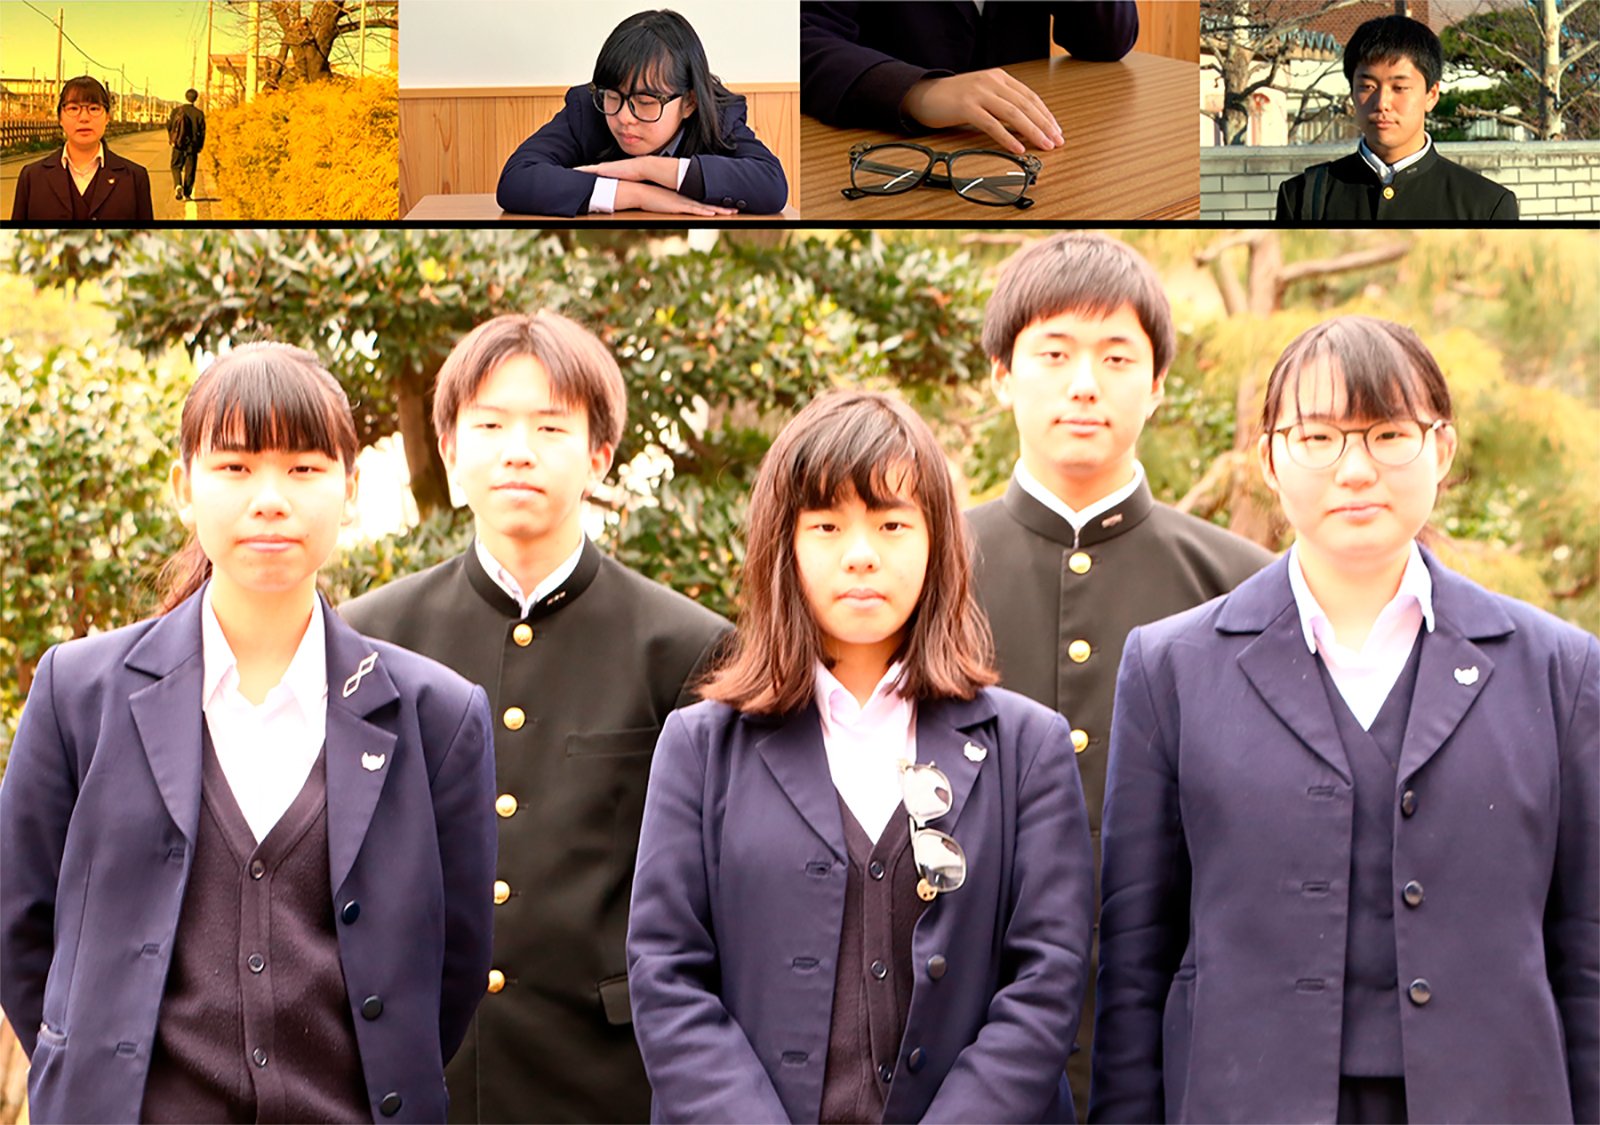 NewsroomJapanパナソニックキッズスクール キッド・ウィットネス・ニュース（KWN）日本コンテスト2019 最優秀作品賞3校を決定